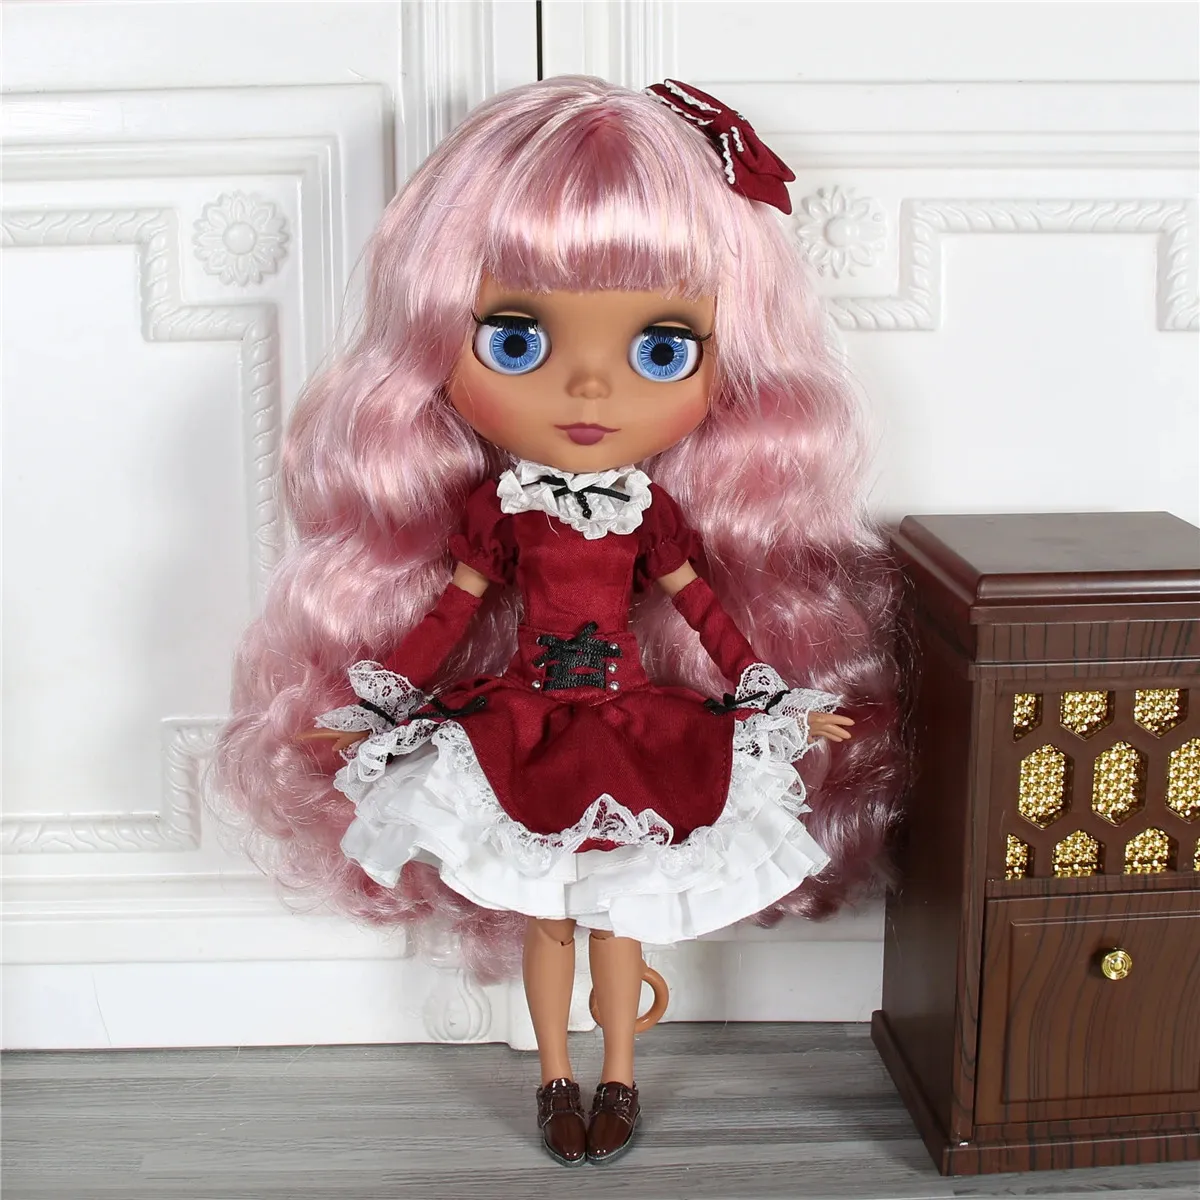 Dolls ICY DBS Blyth Doll 1 6 bjd joint body dark skin matte face purple mix pink hair toy 30cm girls gift 231124